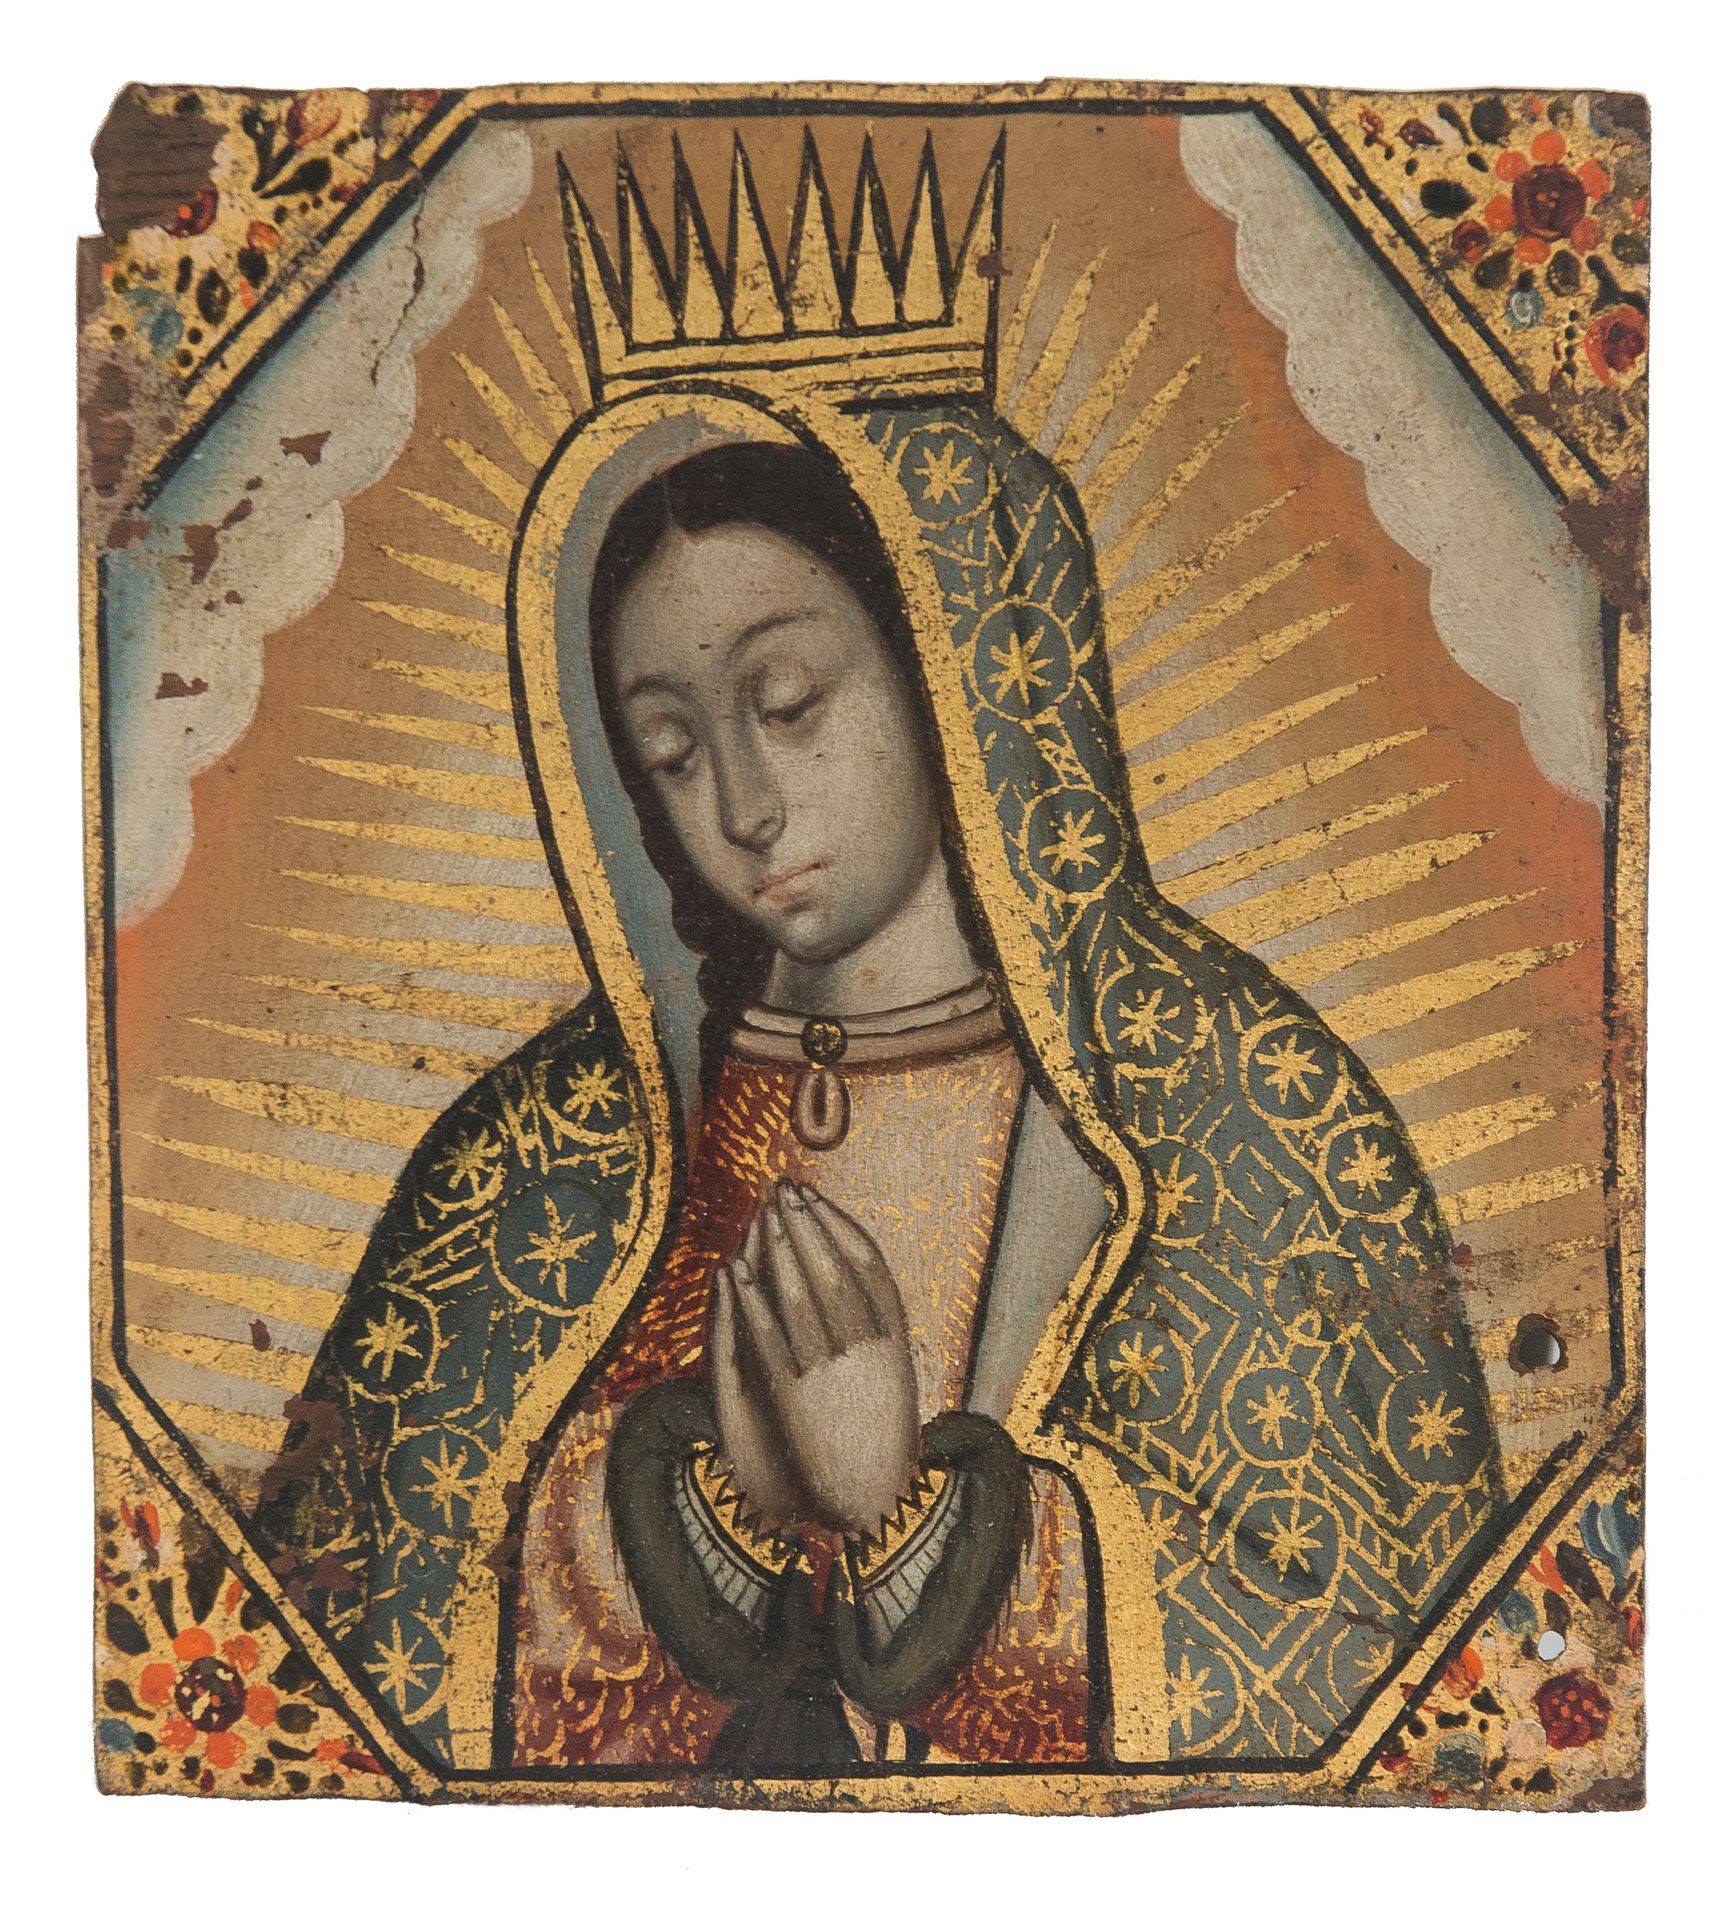 Colonial School. Mexico or Peru. 18th century. 
"瓜达卢佩的圣母"

铜上的油画和金箔。 

10 x 9厘米。